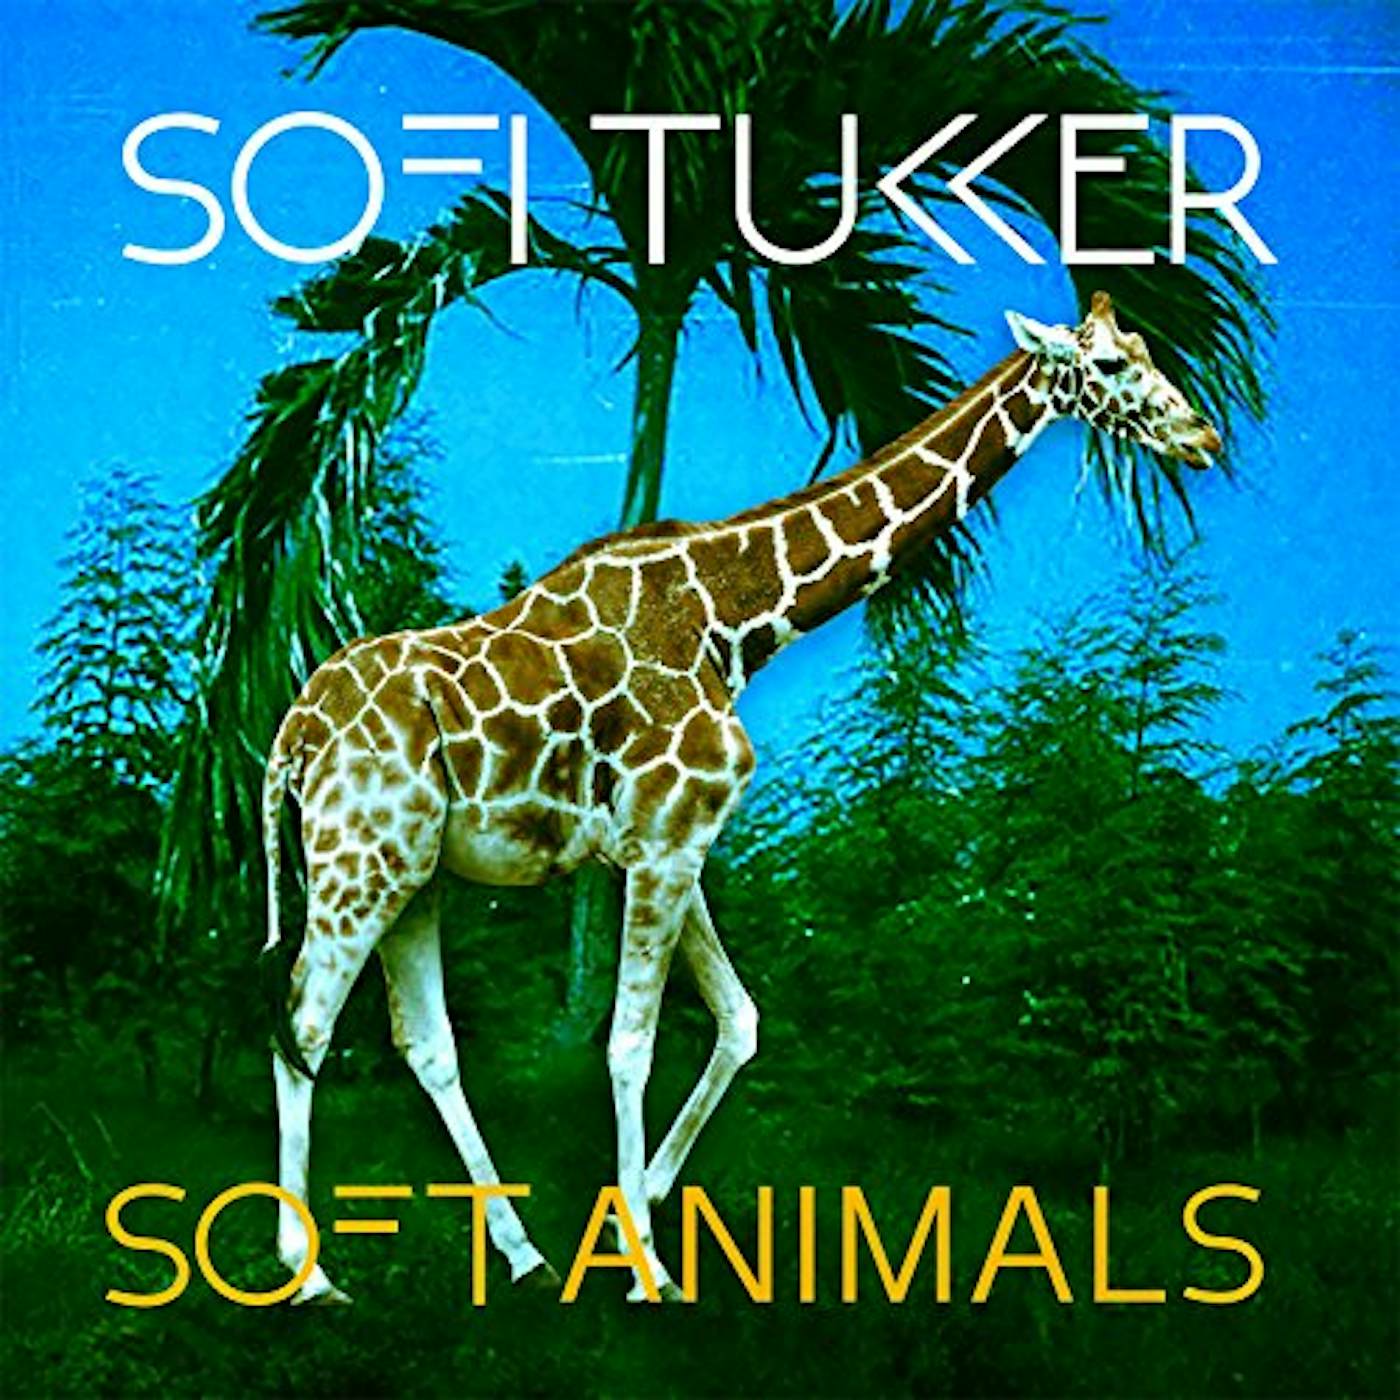 Sofi Tukker Soft Animals Vinyl Record